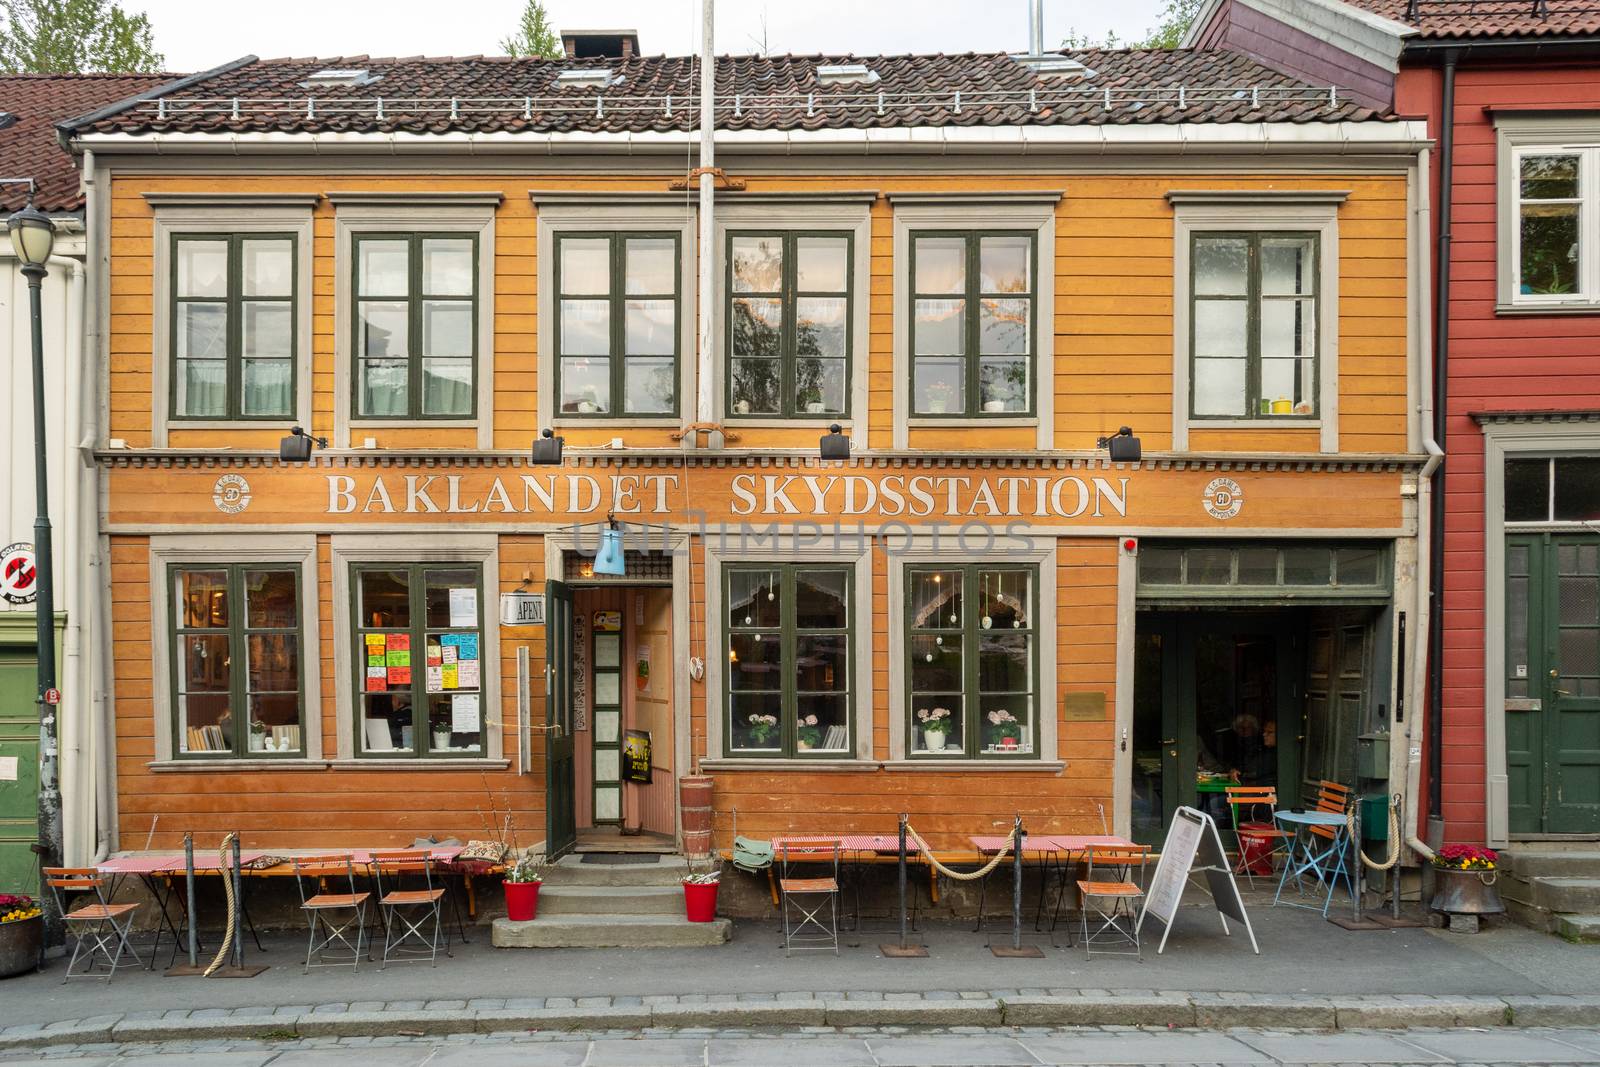 Baklandet Skydsstation idyllic and peaceful café in Trondheim, Norway by kb79